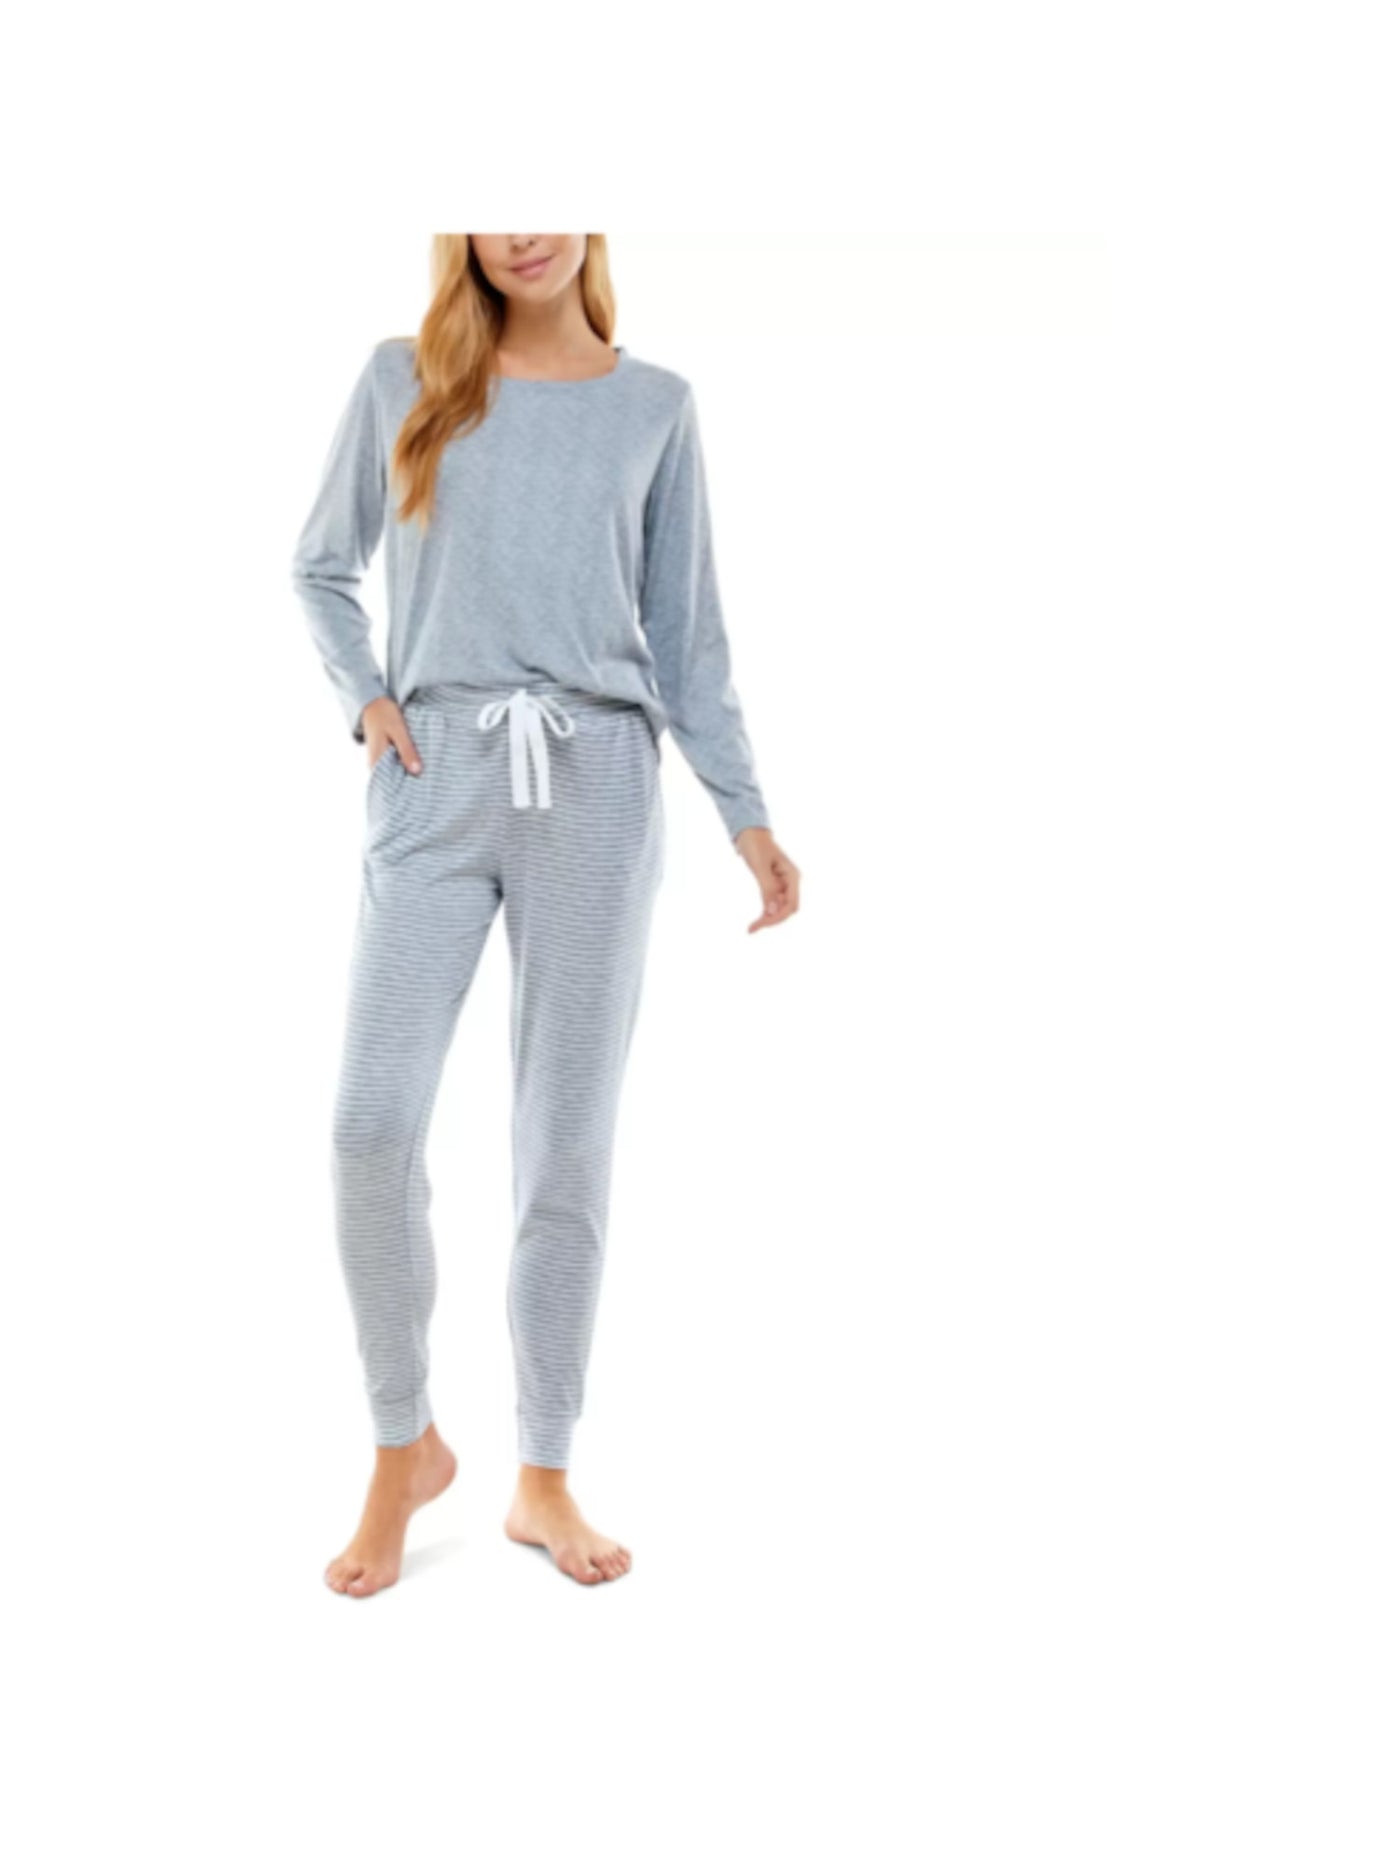 ROUDELAIN Intimates Light Blue Curved Hem Sleep Shirt Pajama Top M